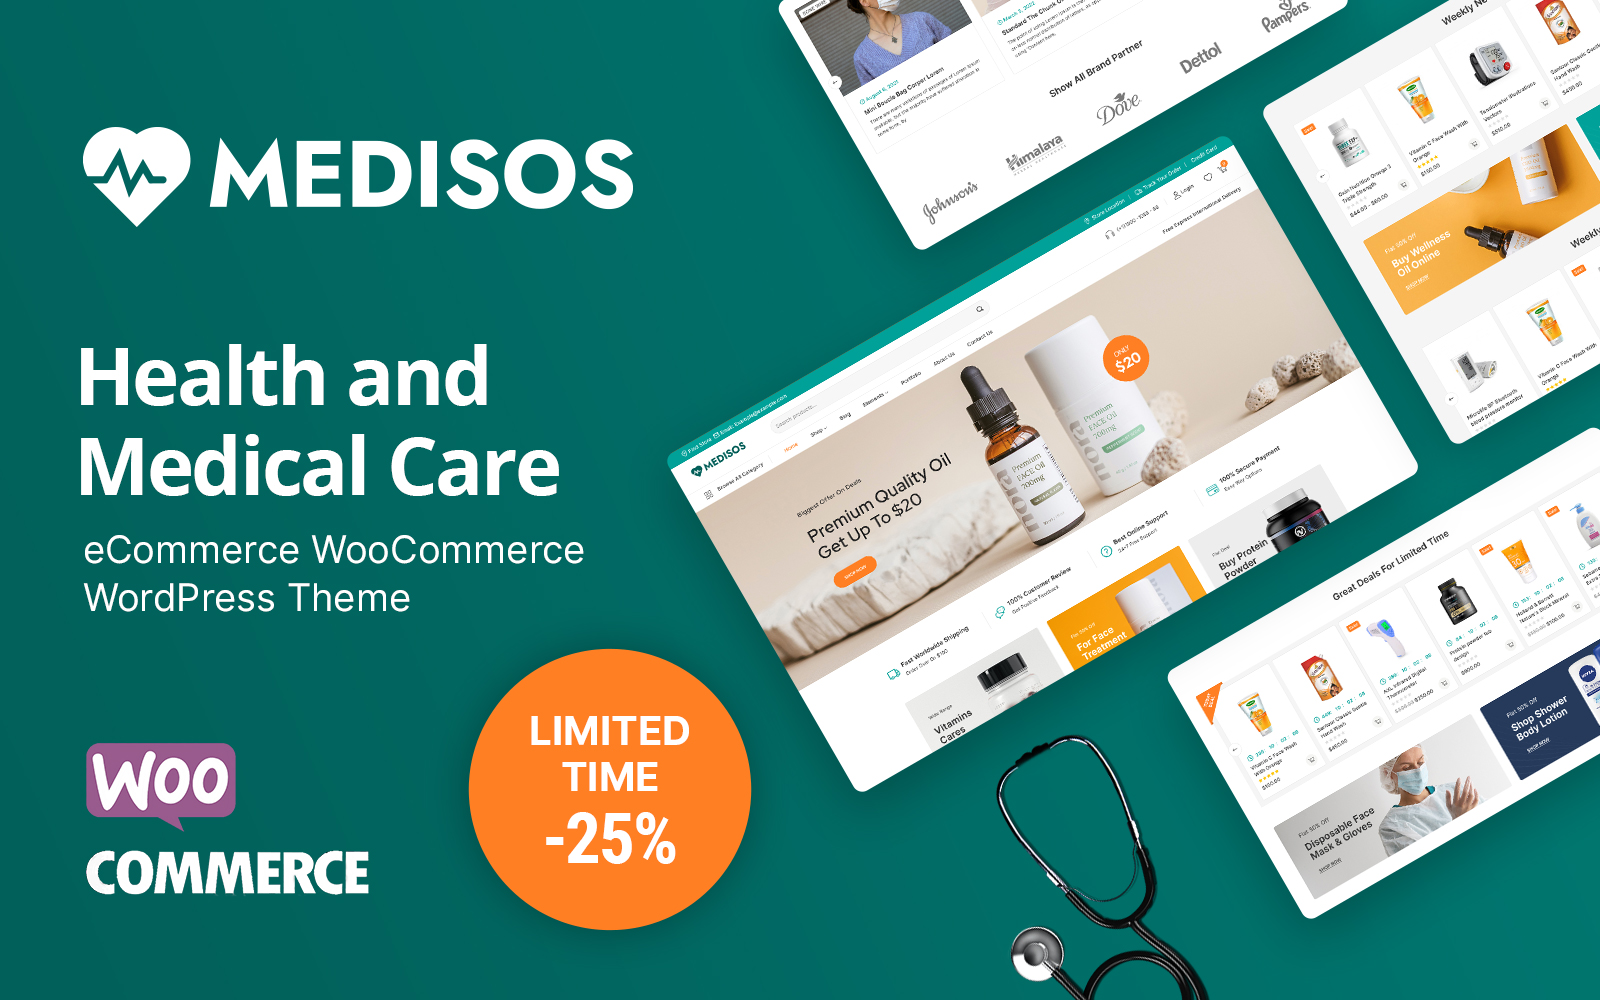 Medisos - Pharmacy and Drug and Medical WooCommerce Theme